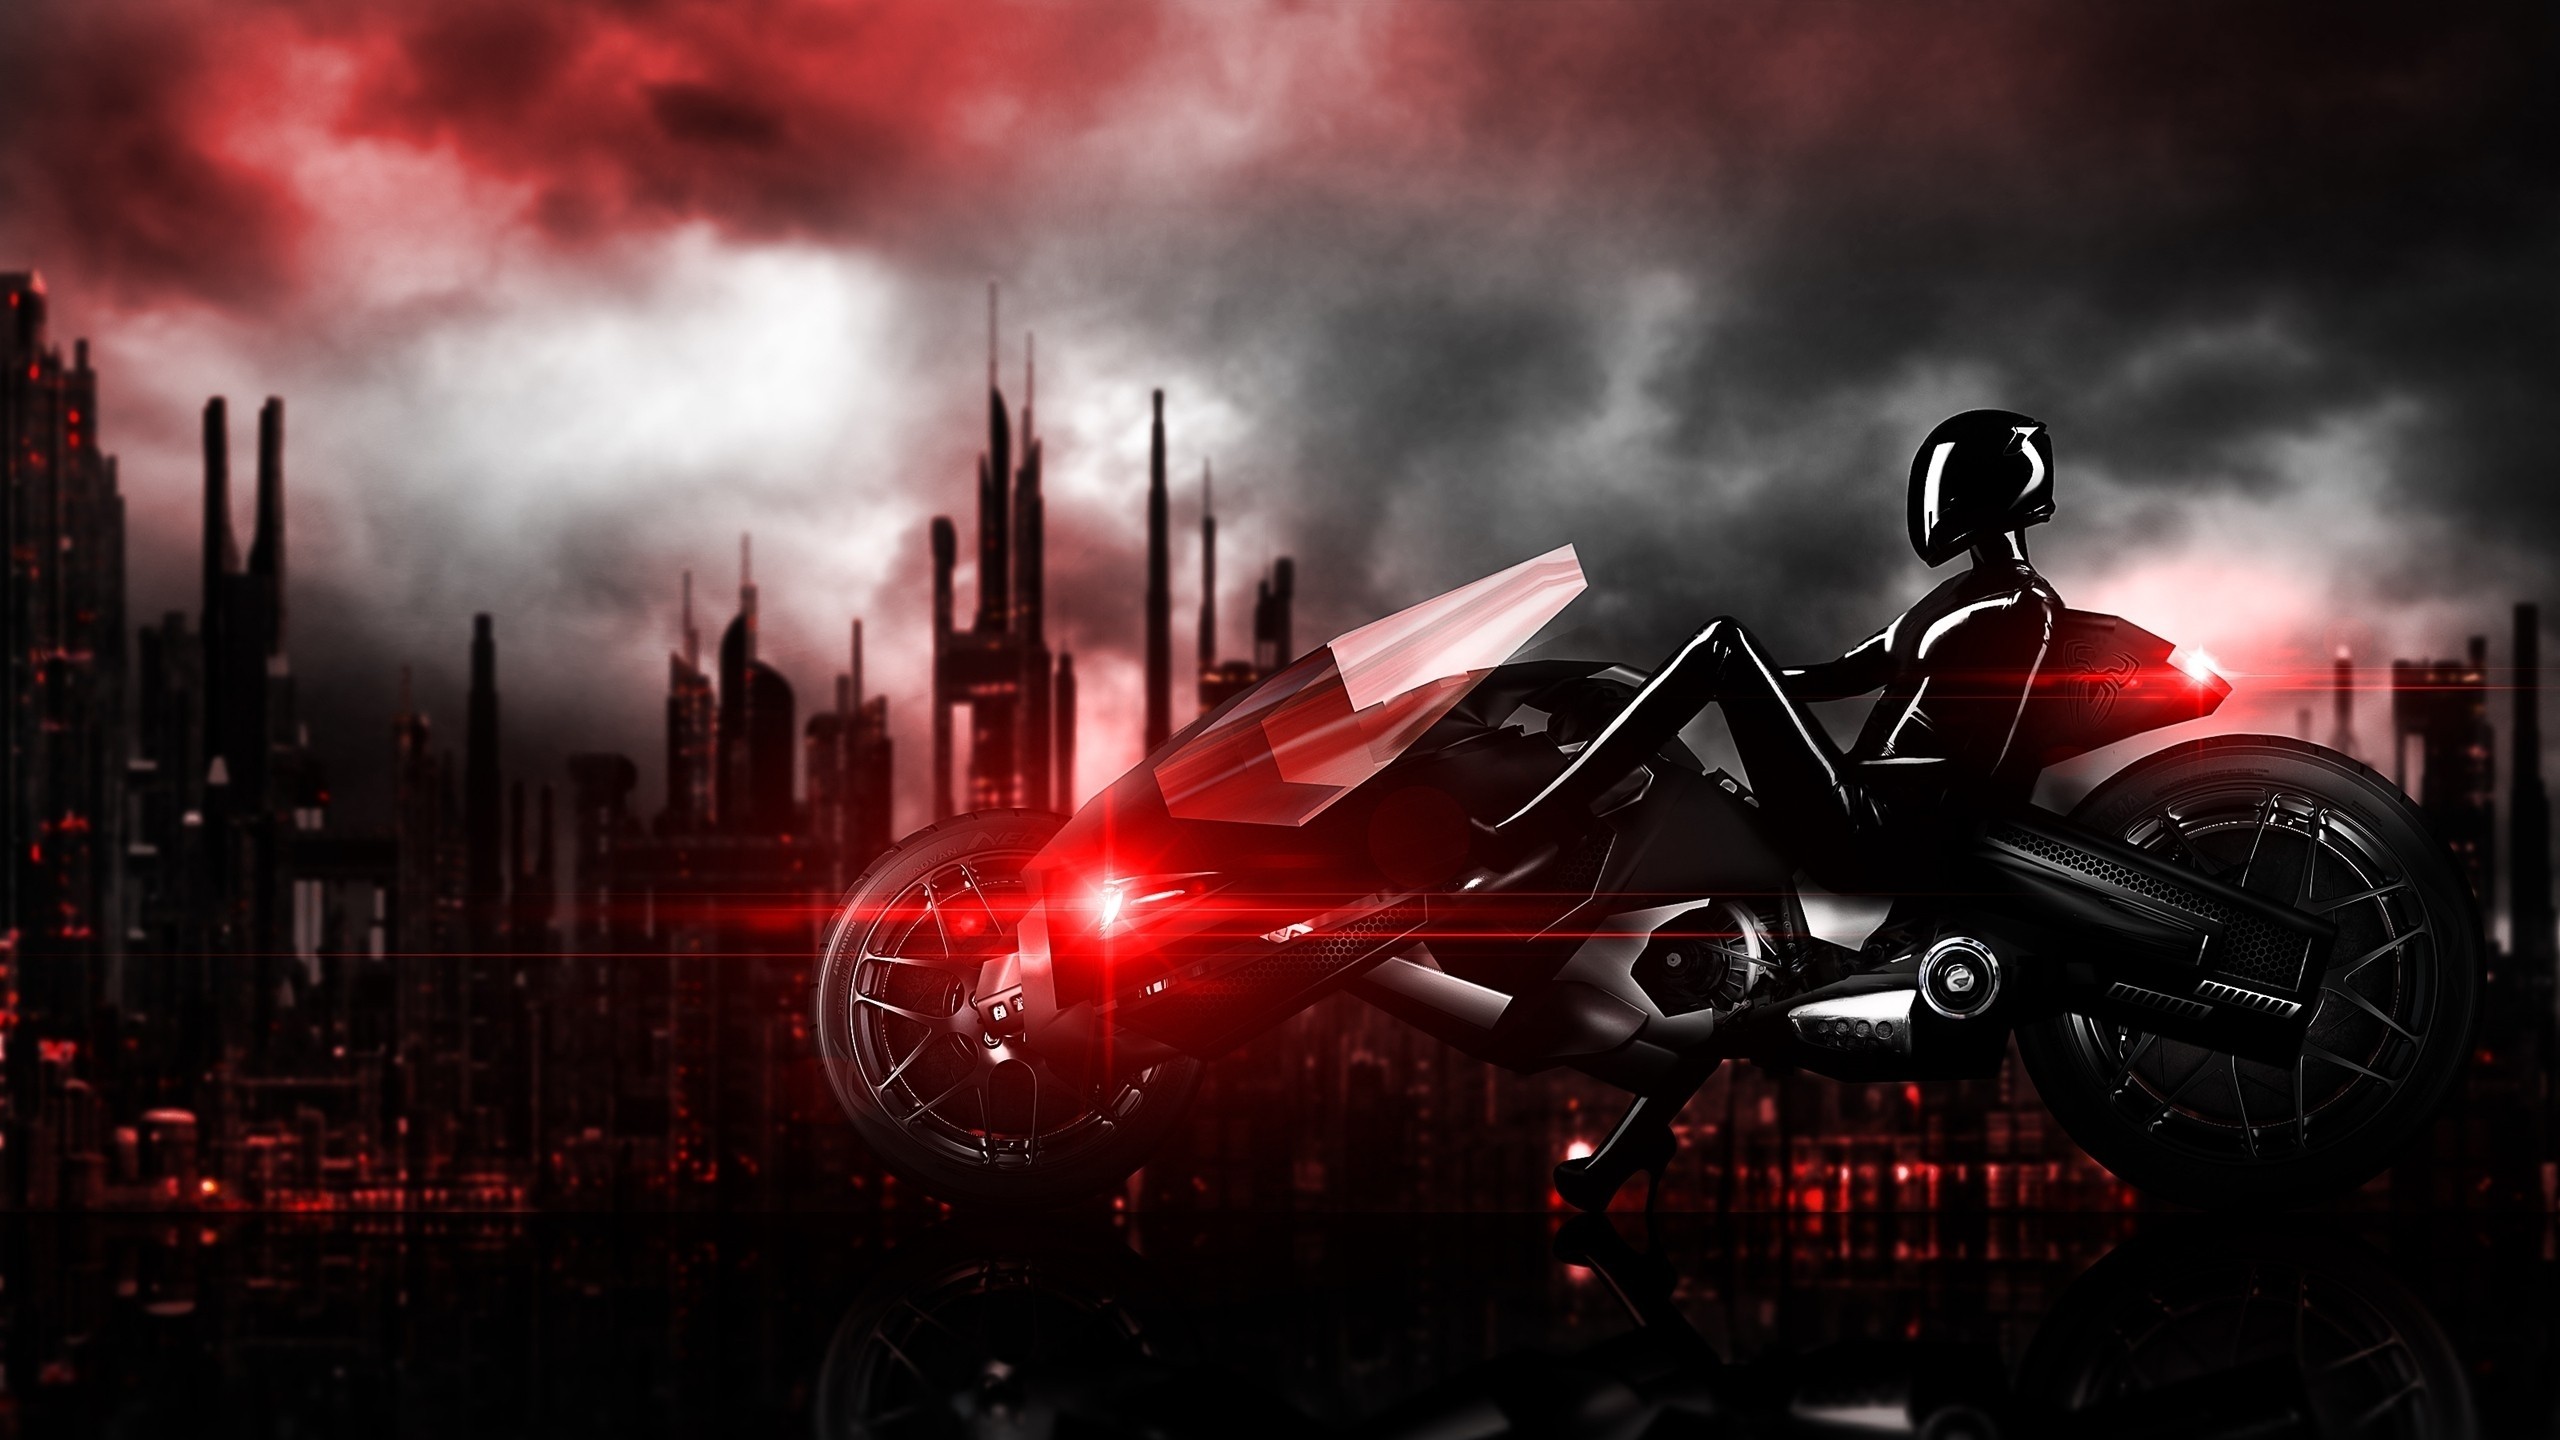 General 2560x1440 futuristic cyberpunk motorcycle latex bodysuit science fiction vehicle digital art